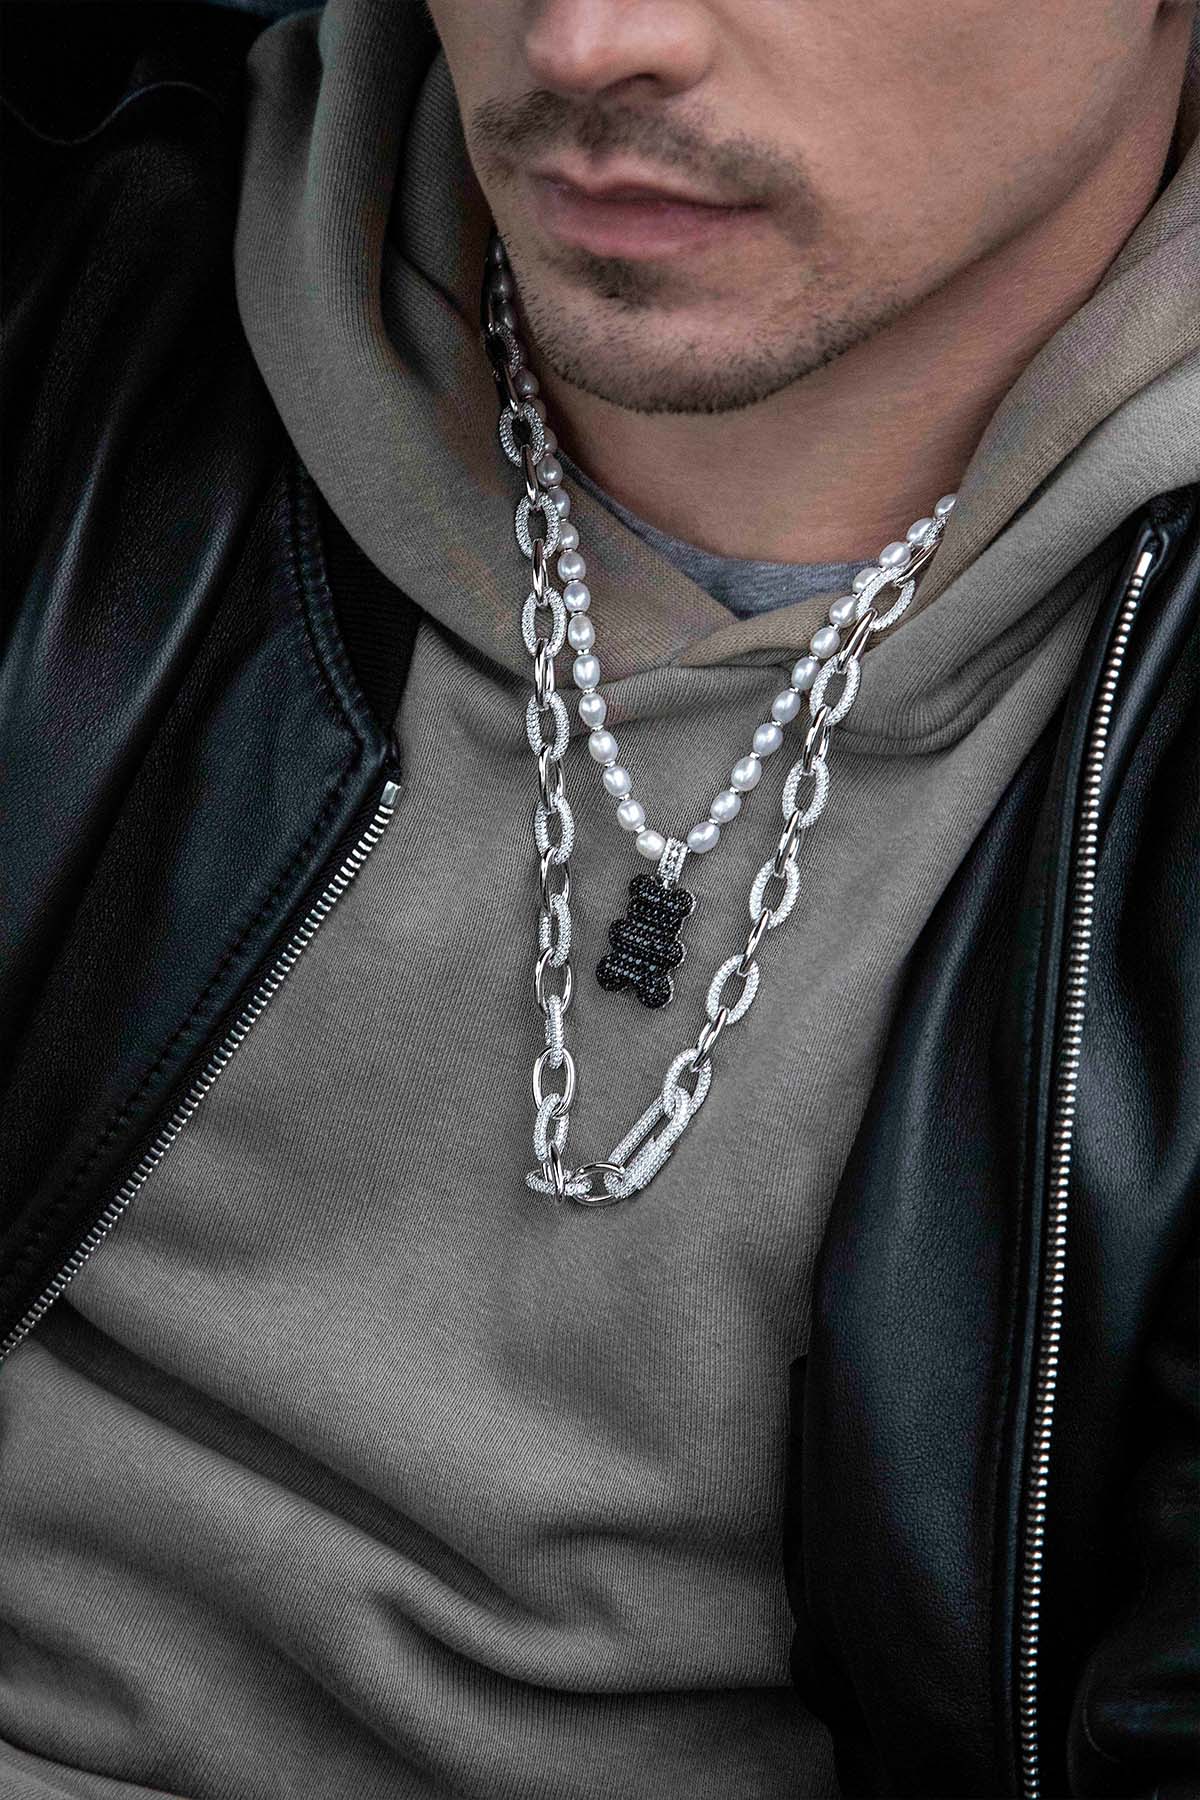 XL Mood Yummy Bear Adjustable Necklace with Pearls - APM Monaco